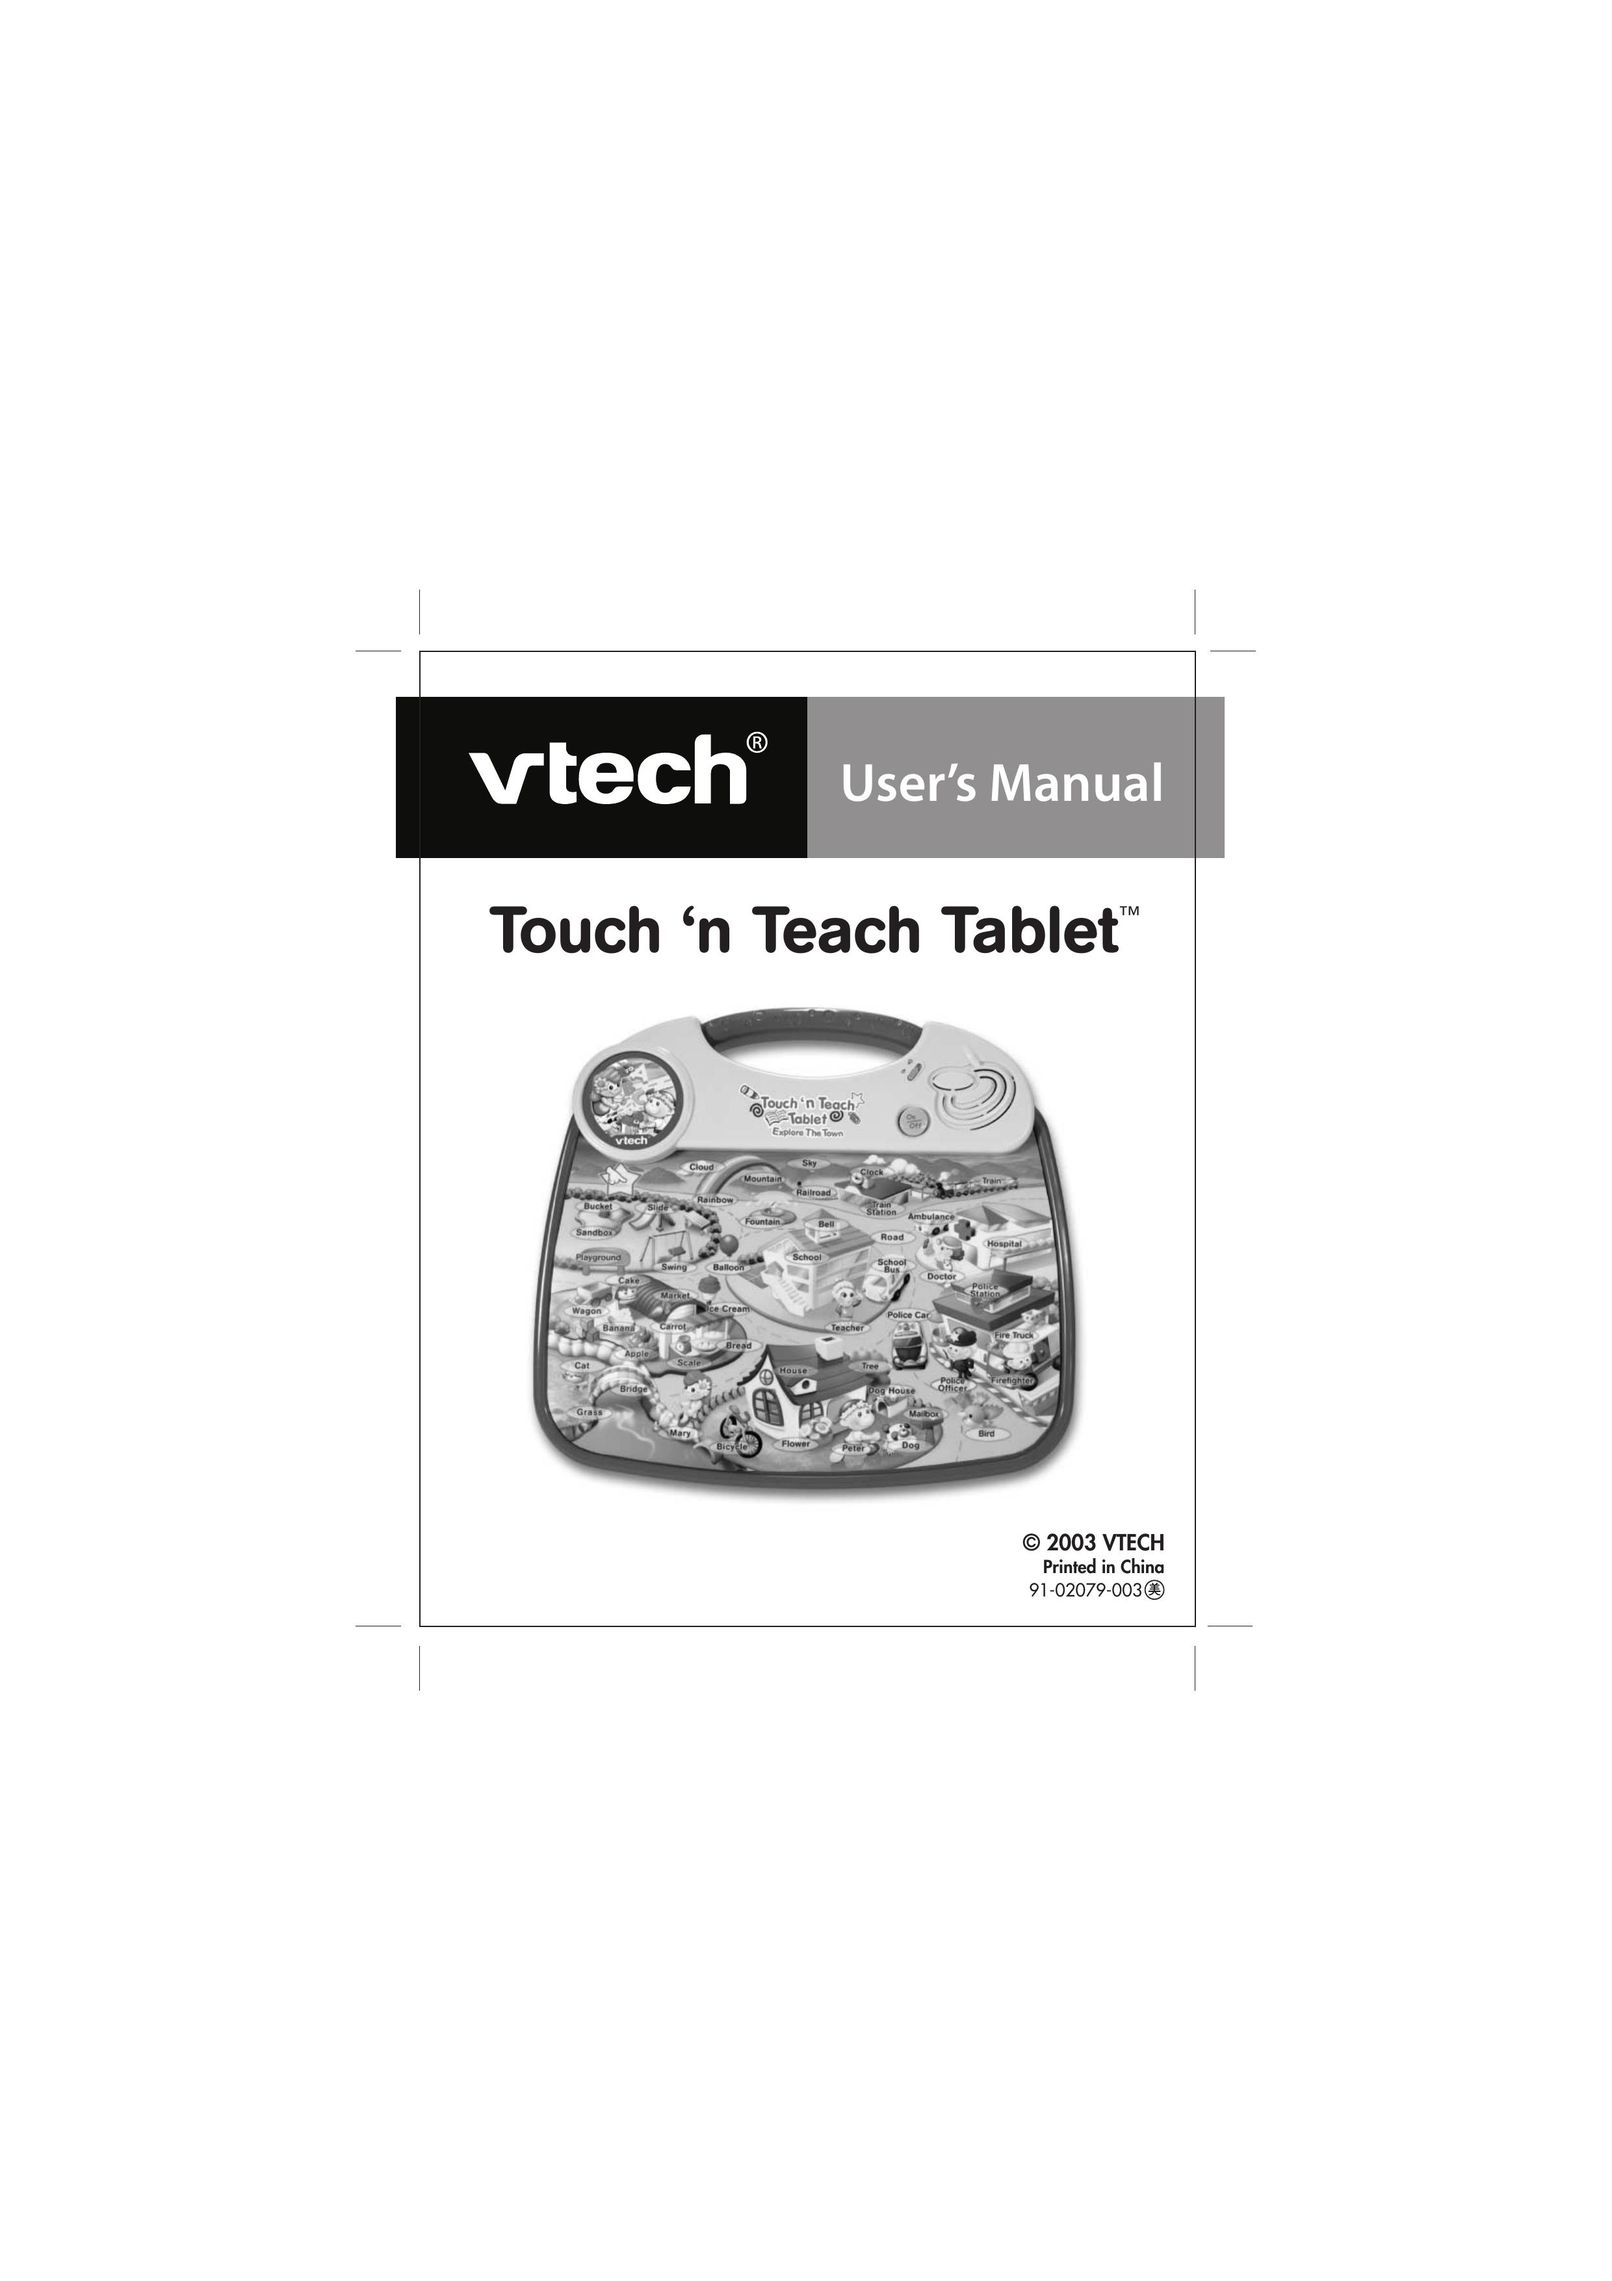 VTech Touch 'n Teach Table Games User Manual